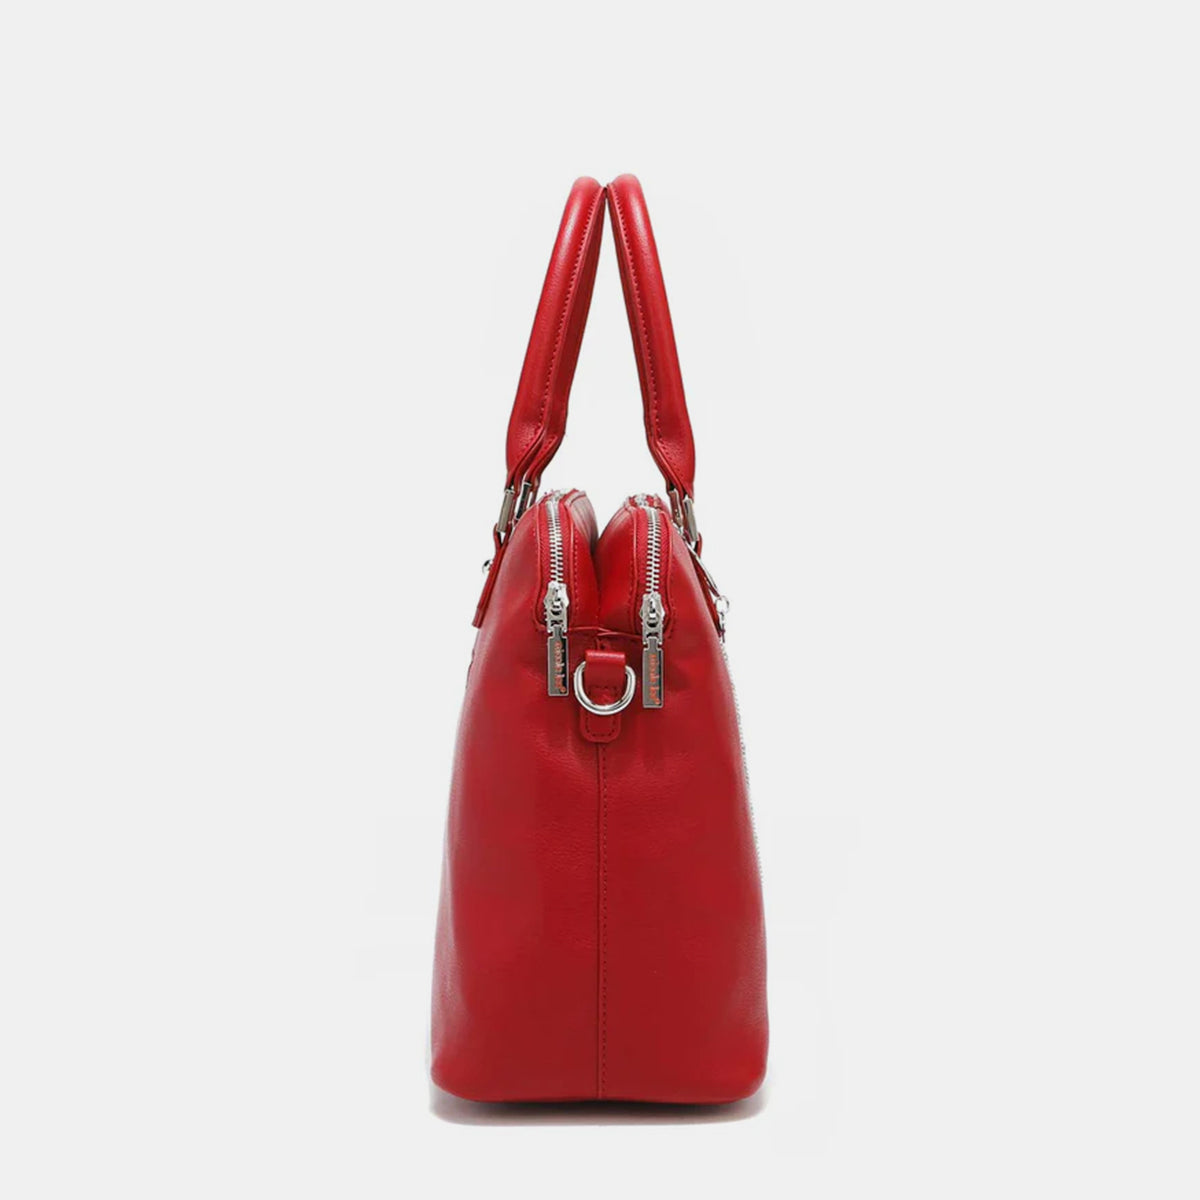 Studded Decor Handbag